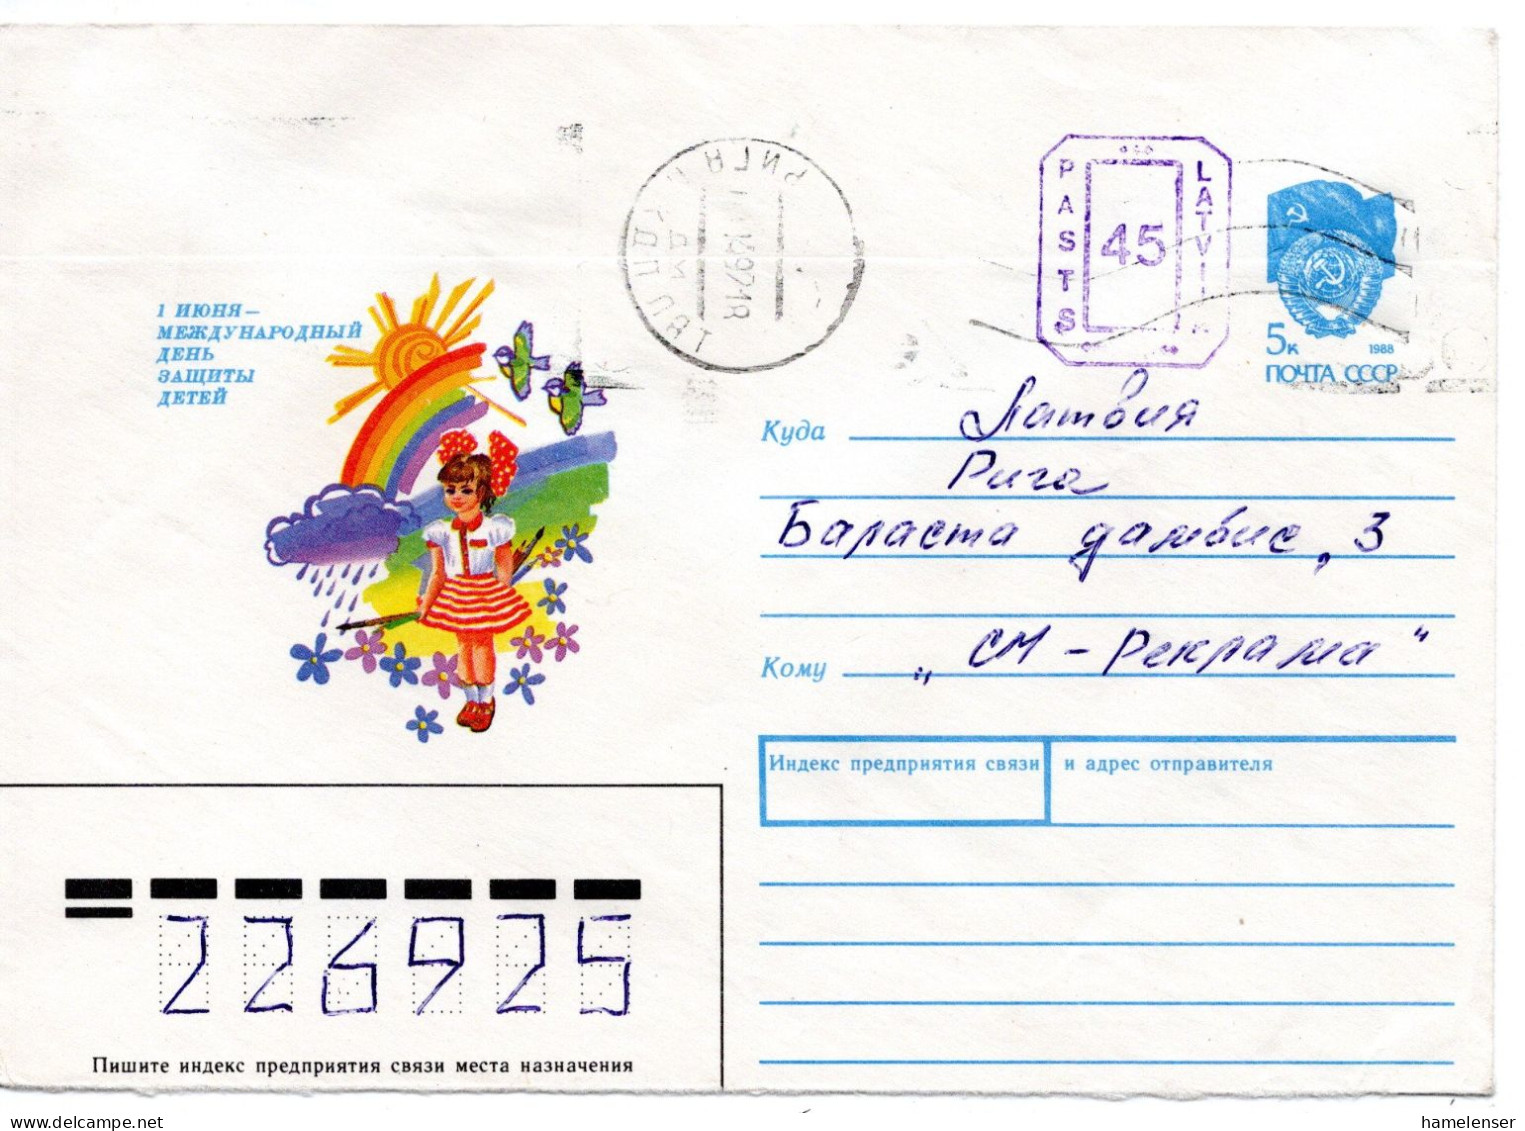 63959 - Lettland - 1992 - Sowj 5K GAU "Kinderschutztag" M ZusWertstpl 45K Als OrtsBf RIGA - Letland